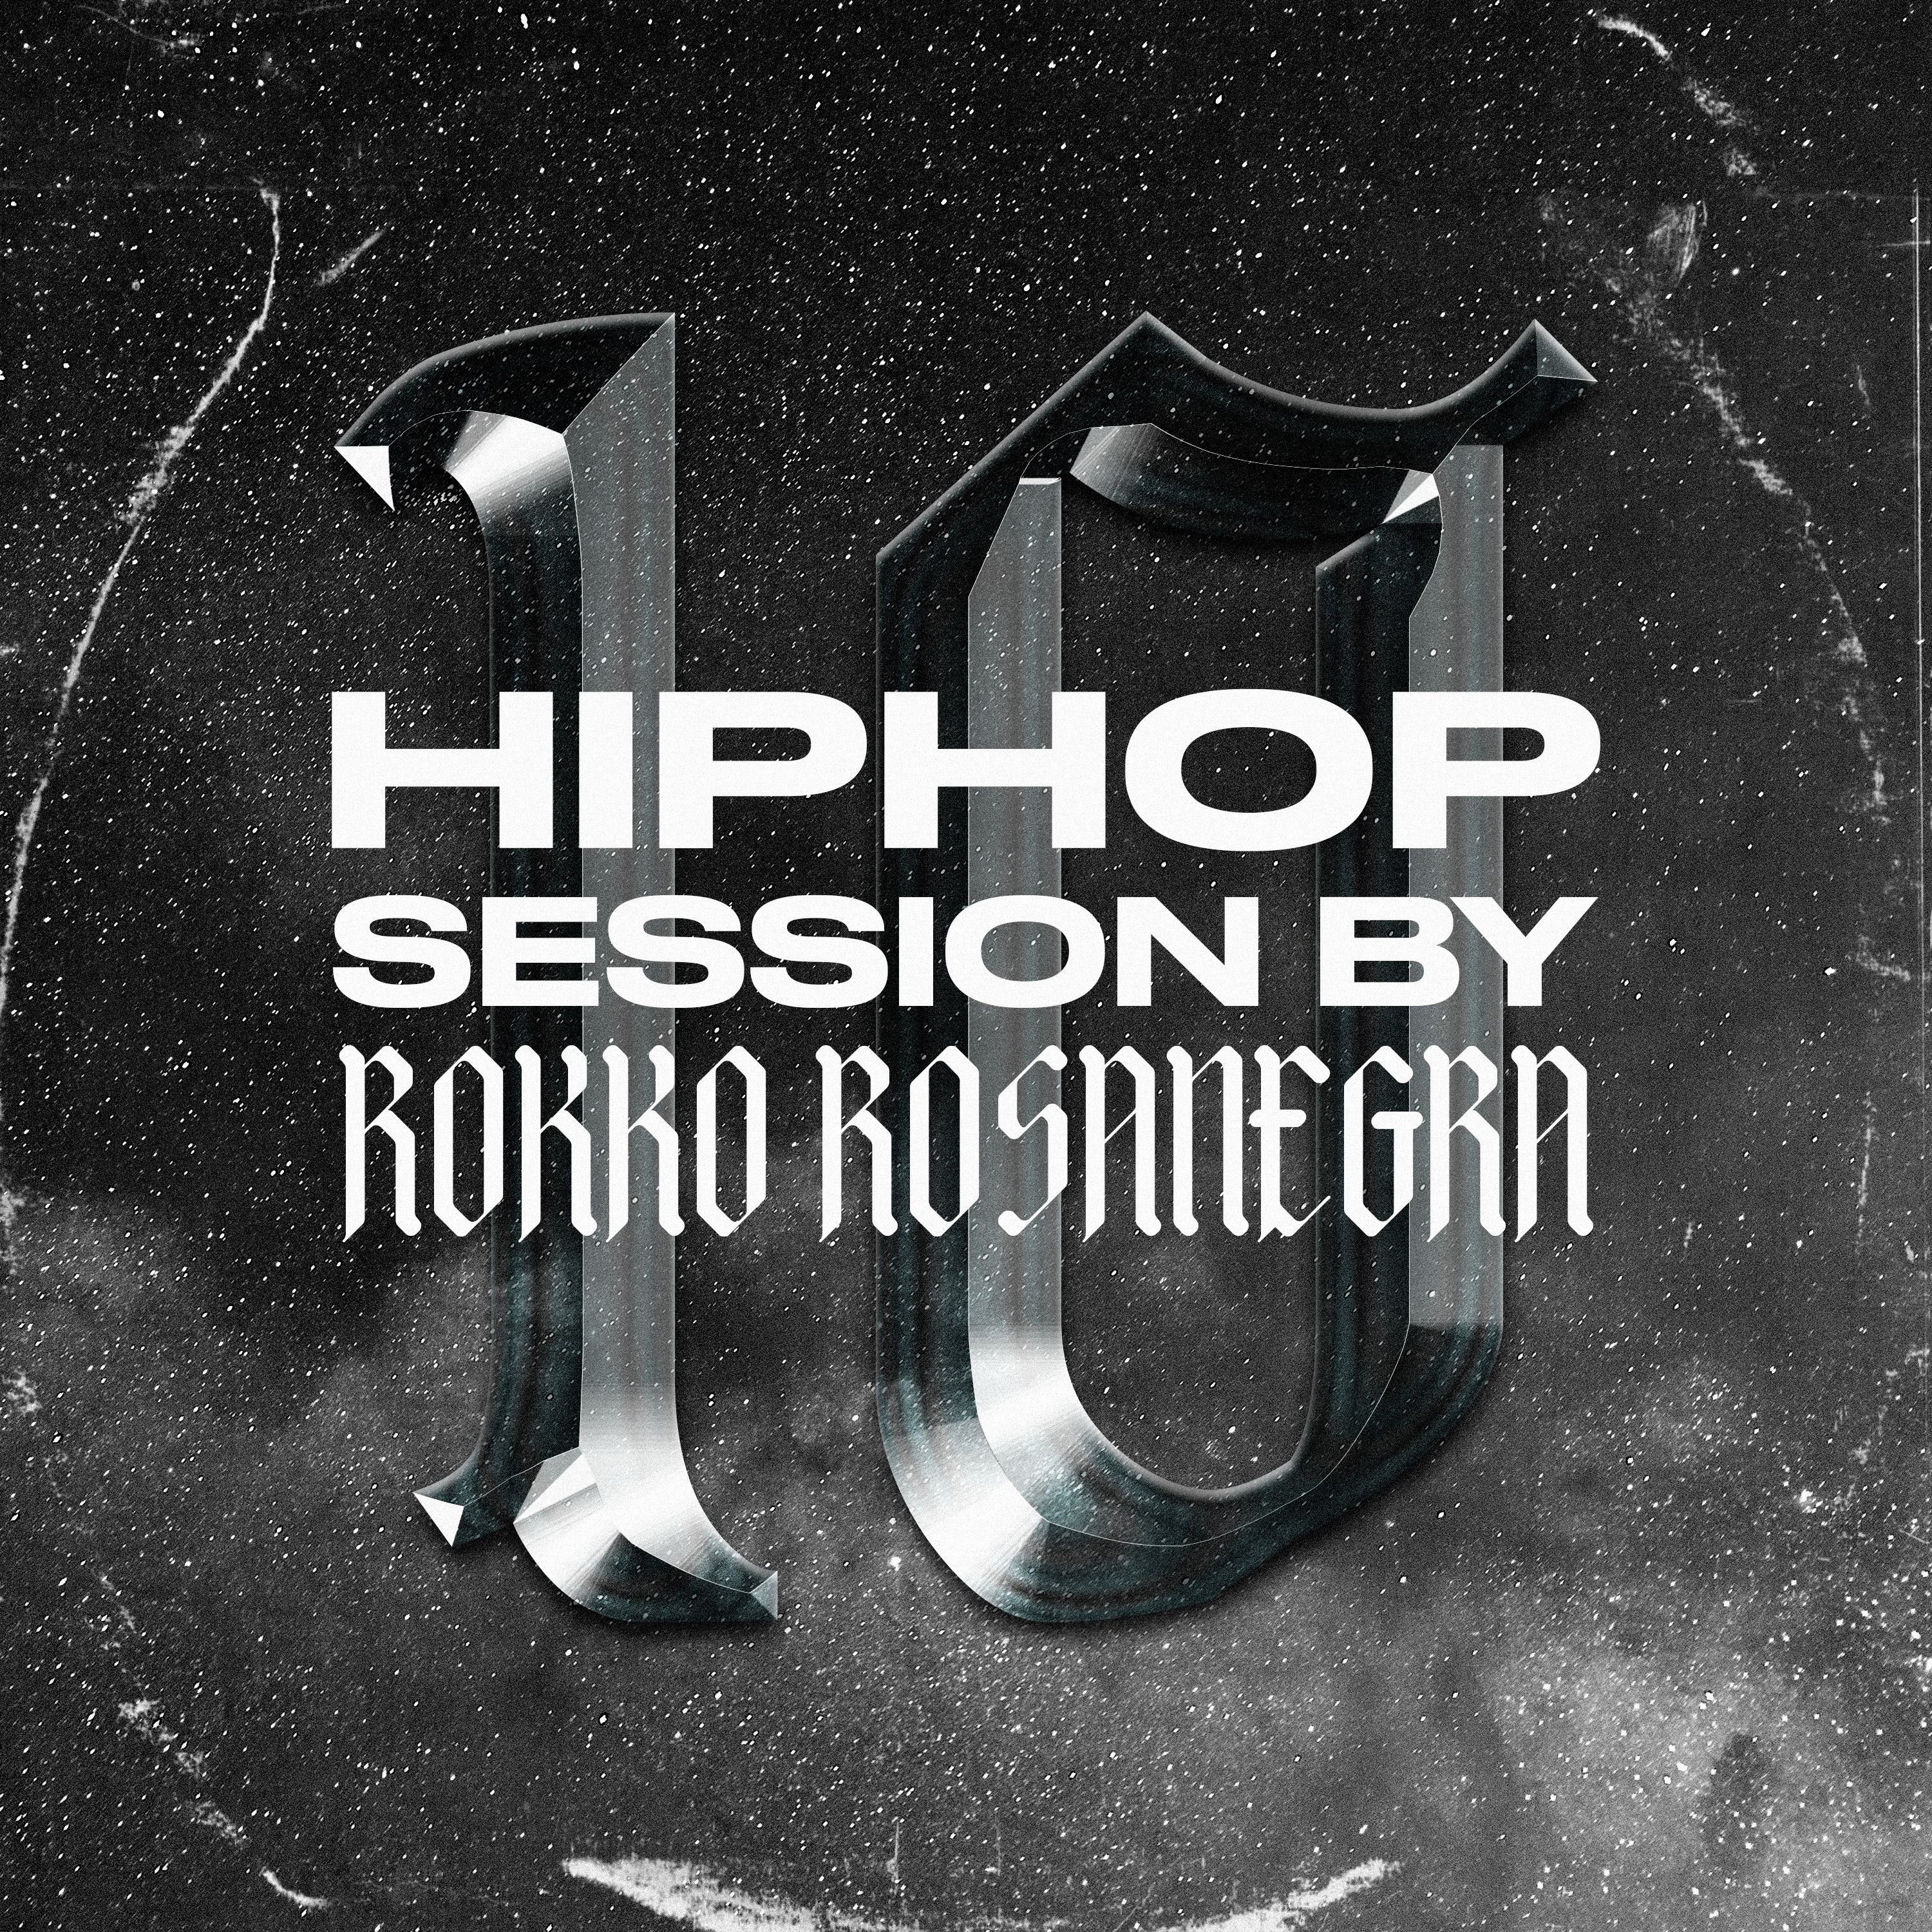 Télécharger HIP HOP SESSION 10 (DJ ROKKO ROSANEGRA)